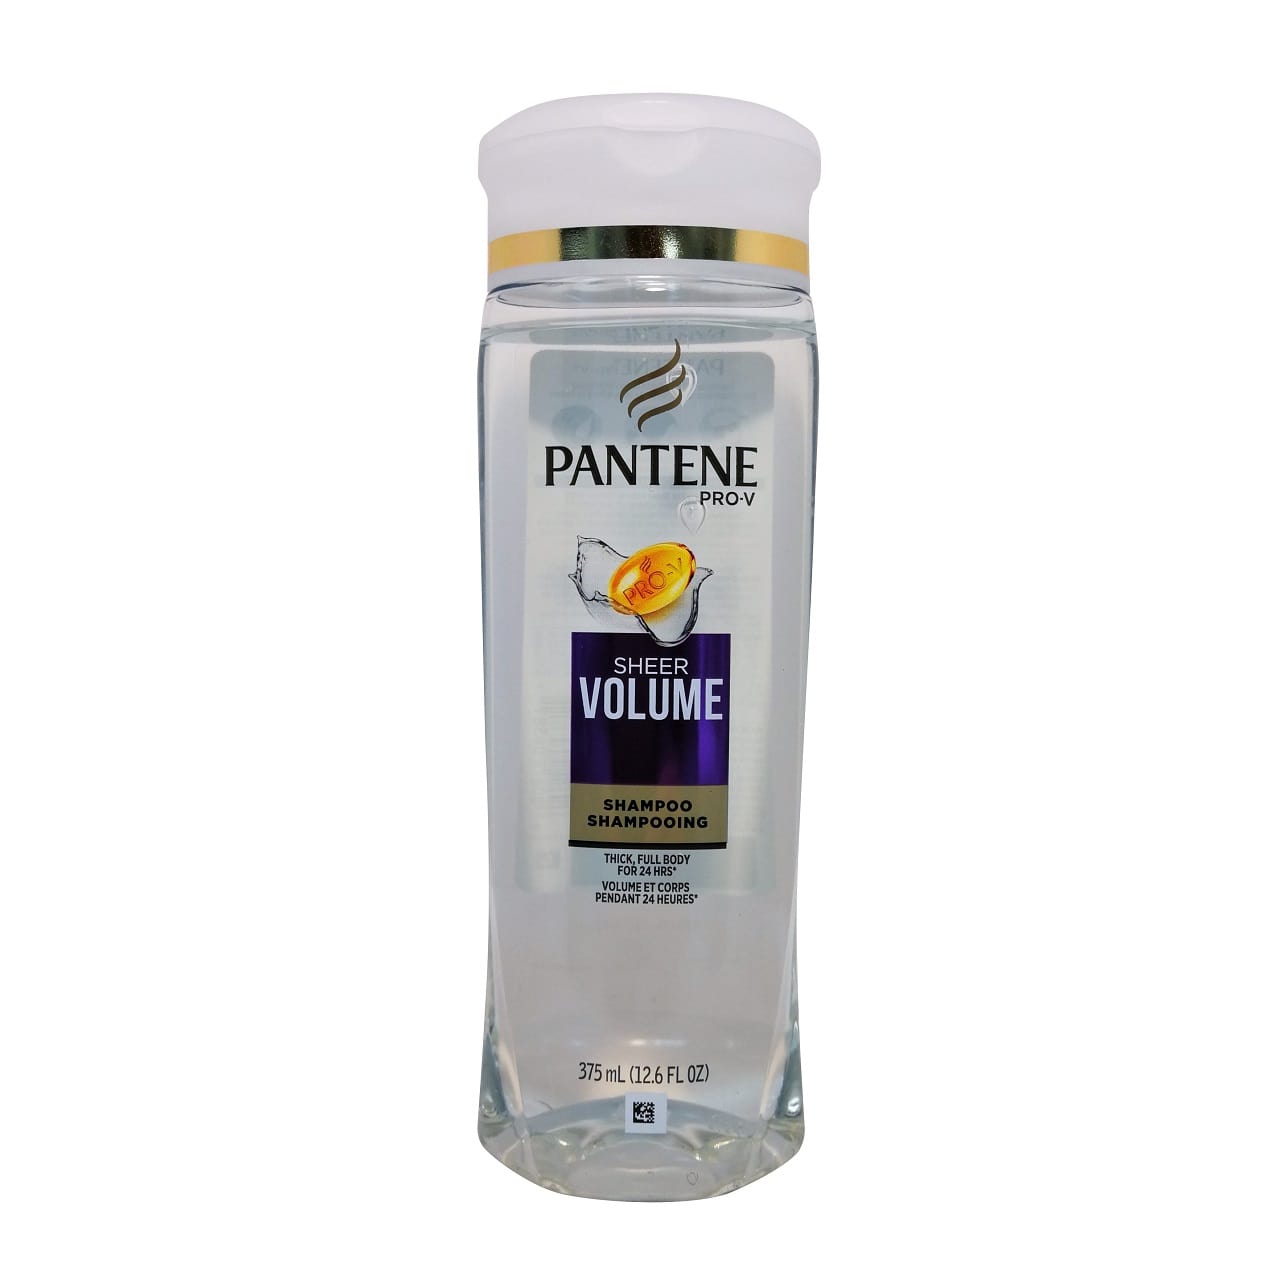 Product label for Pantene Pro-V Daily Sheer Volume Shampoo (375mL)